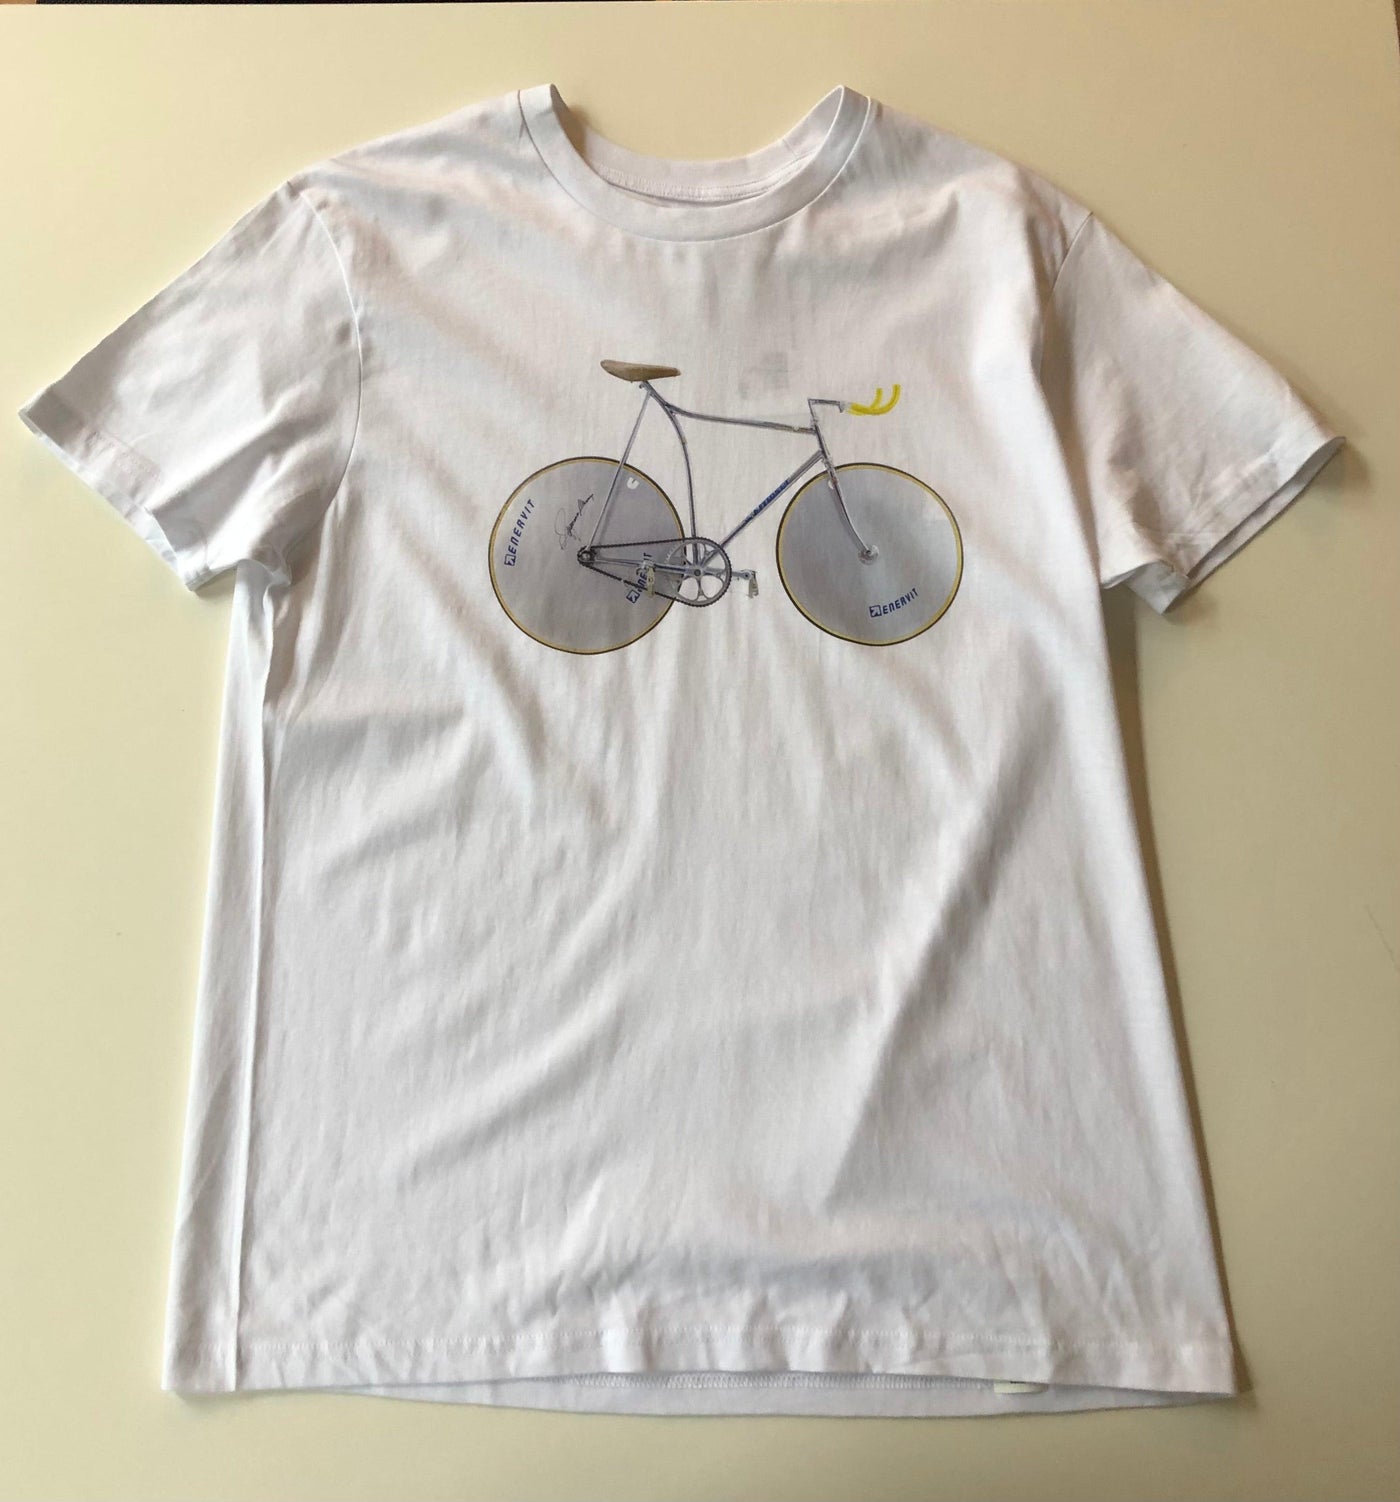 Francesco Moser 51.151 T-Shirt - Steel Vintage Bikes